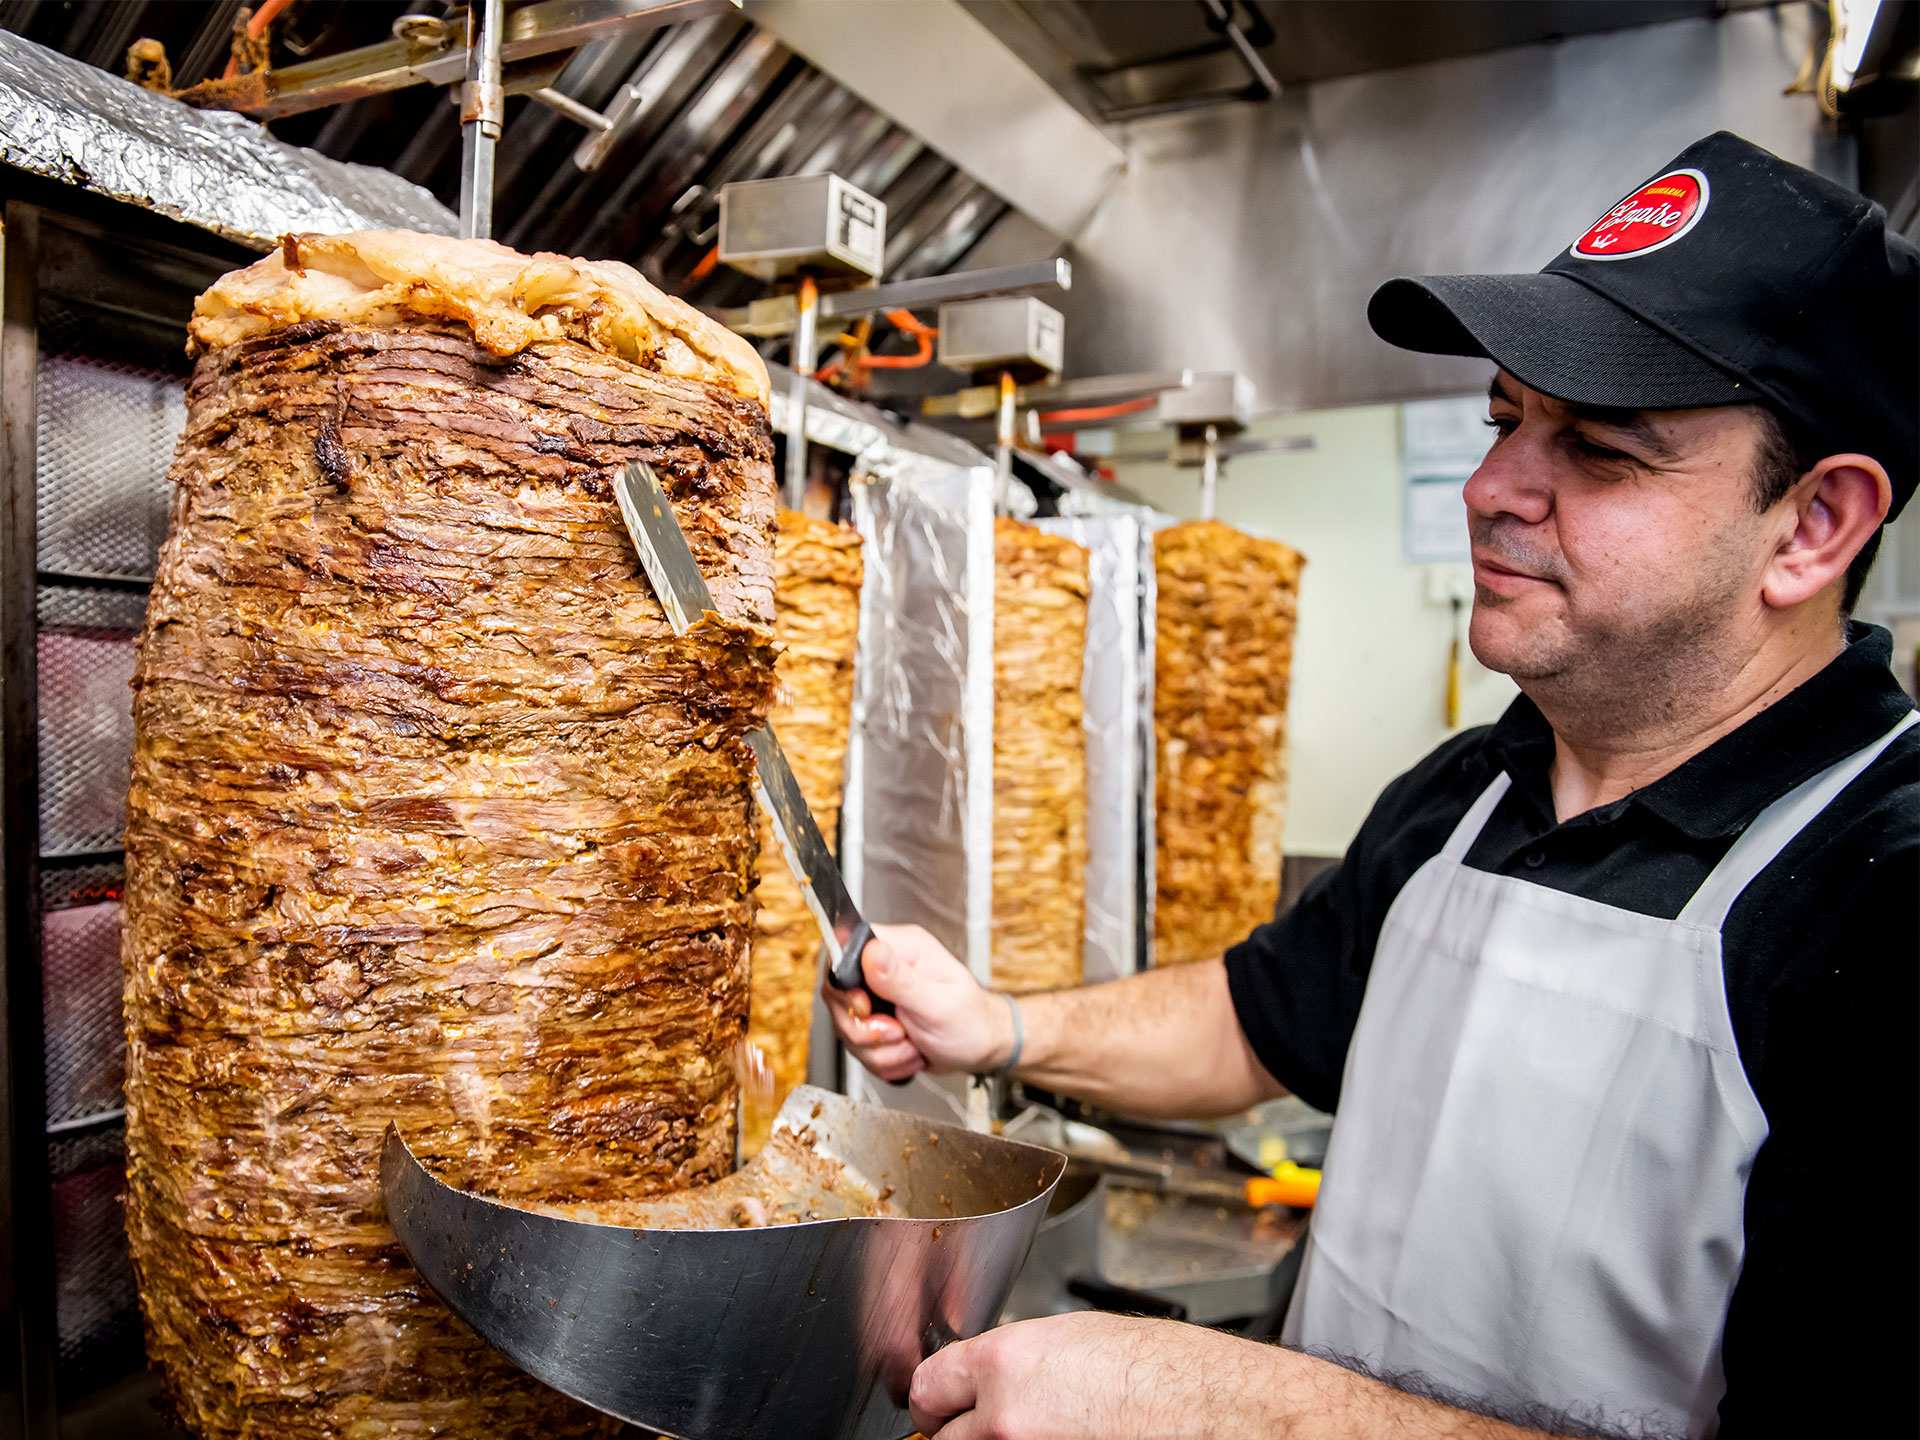 Best Scarborough restaurants | Preparing the shawarma at Shawarma Empire